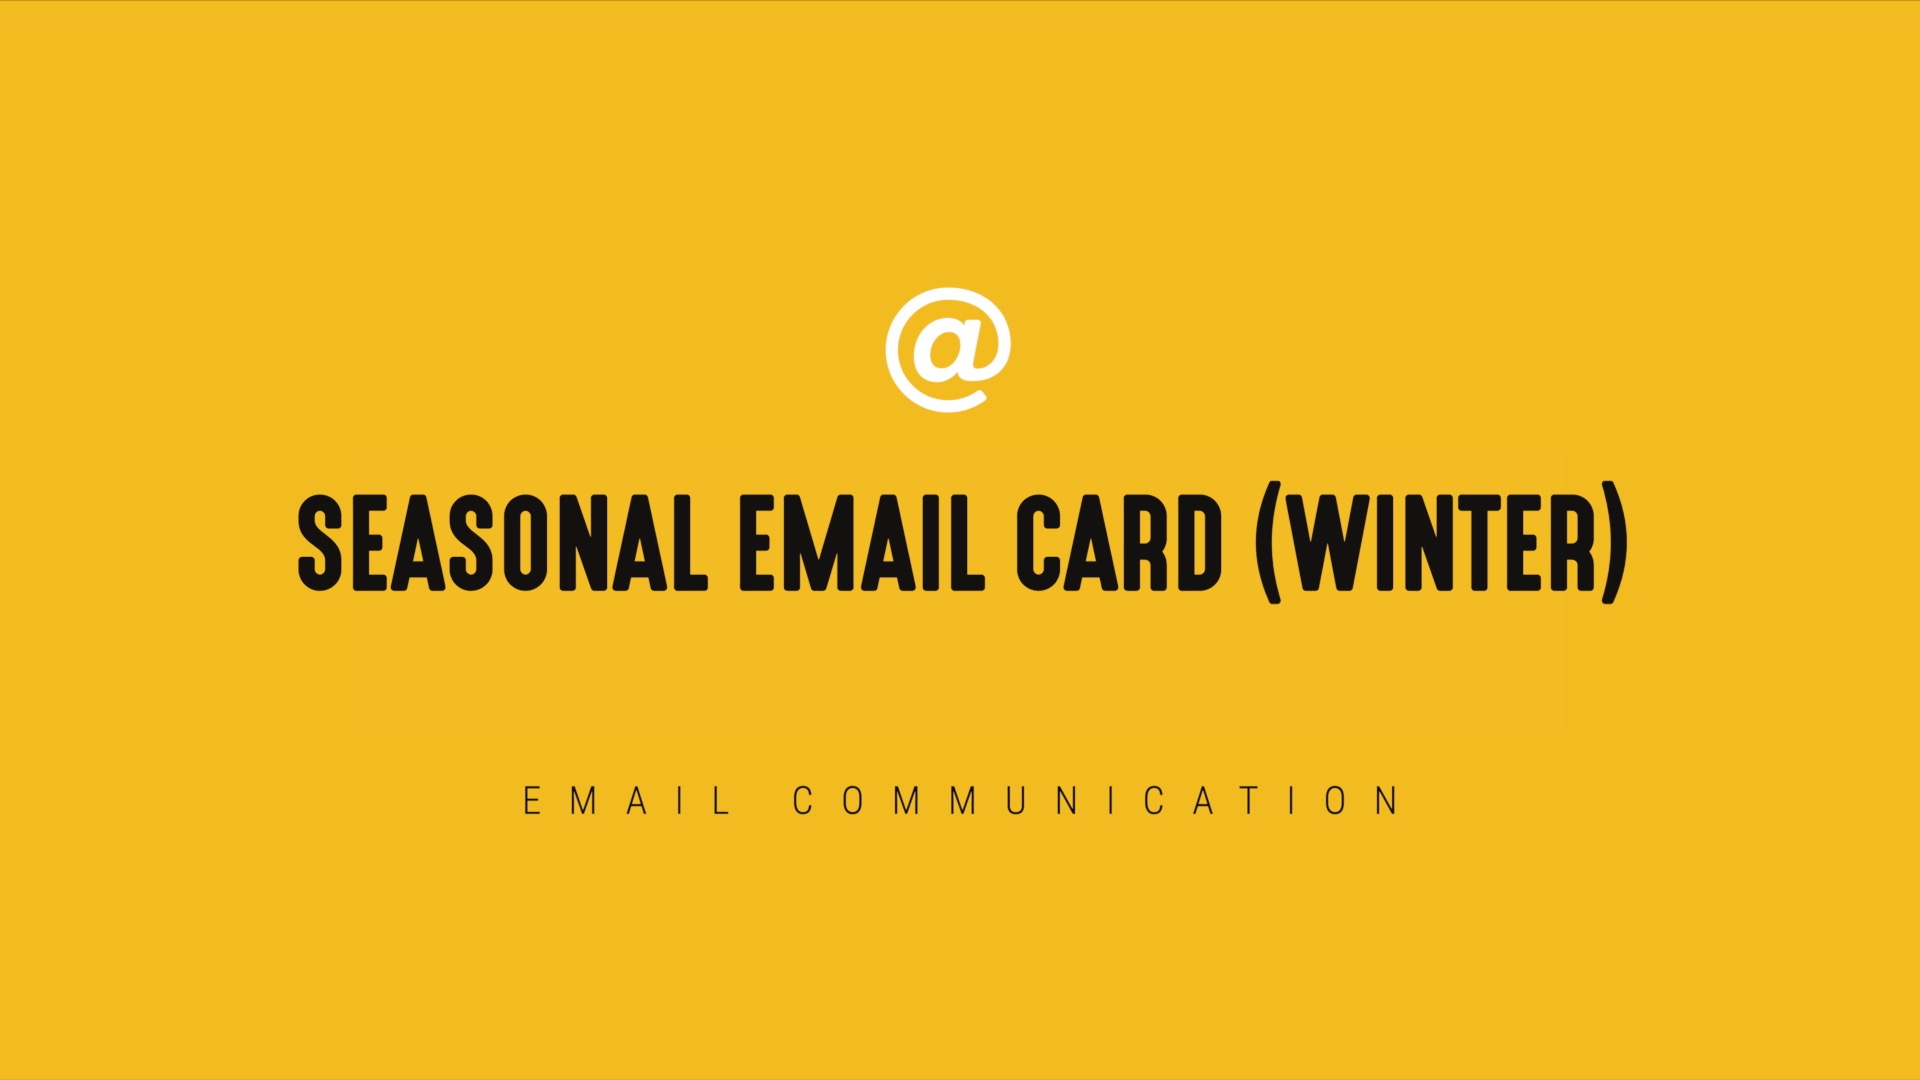 [NEW] Email Communication – Winter Seasonal Card